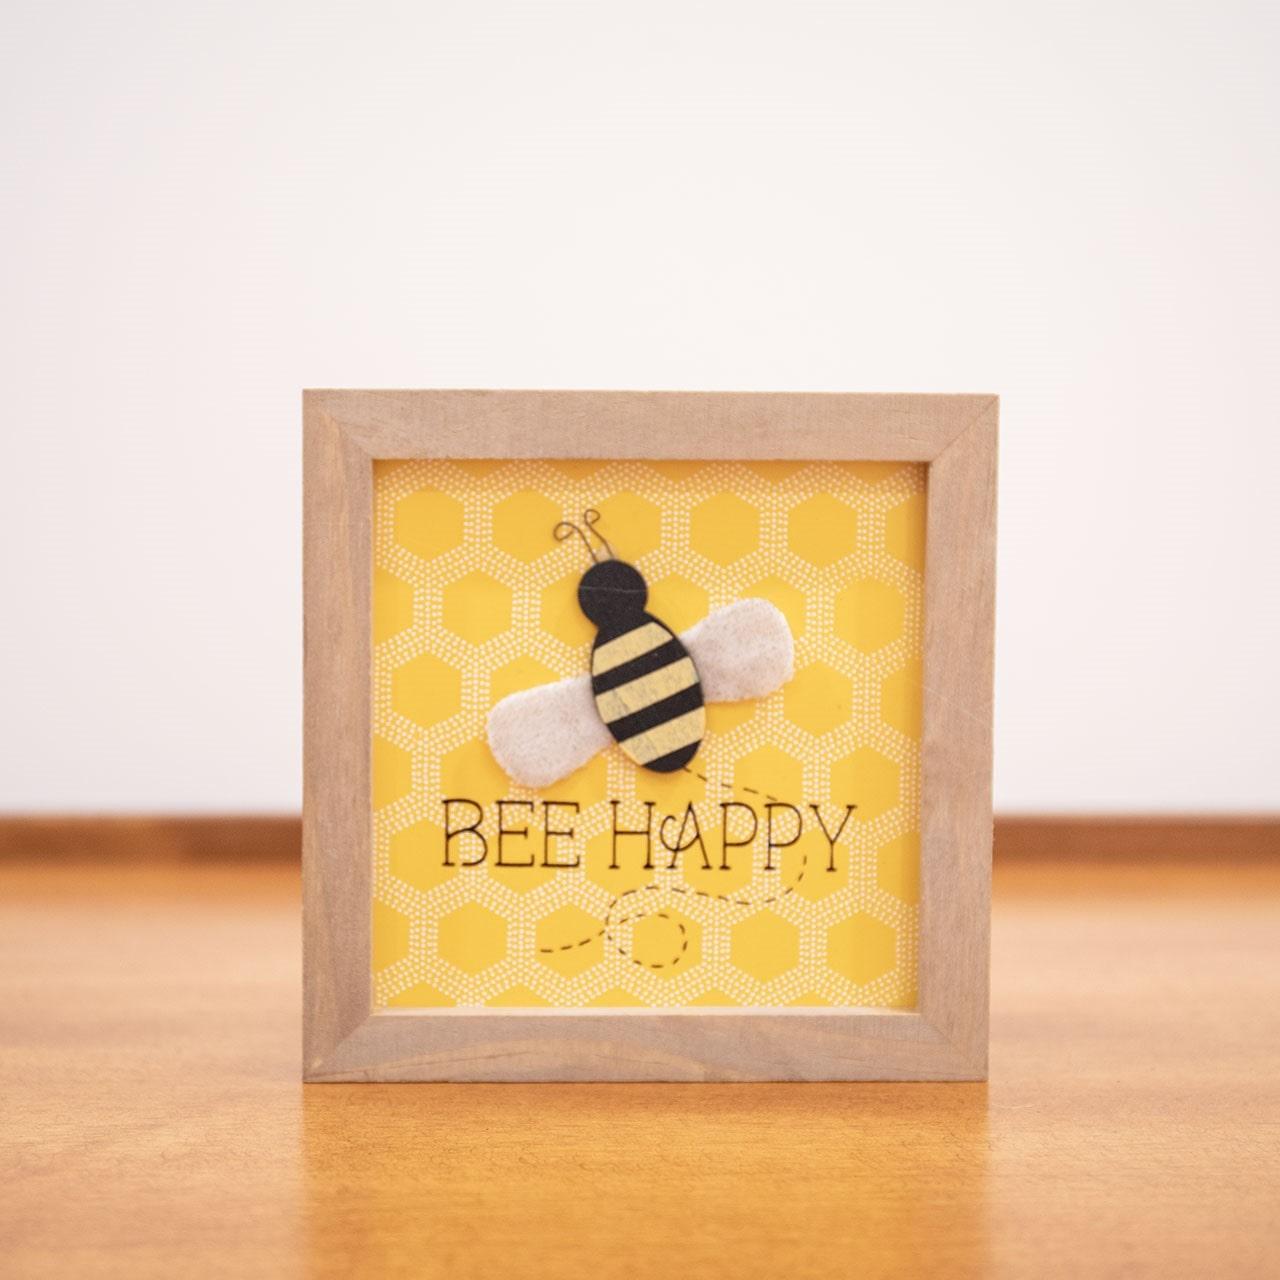 Bee Happy Frame